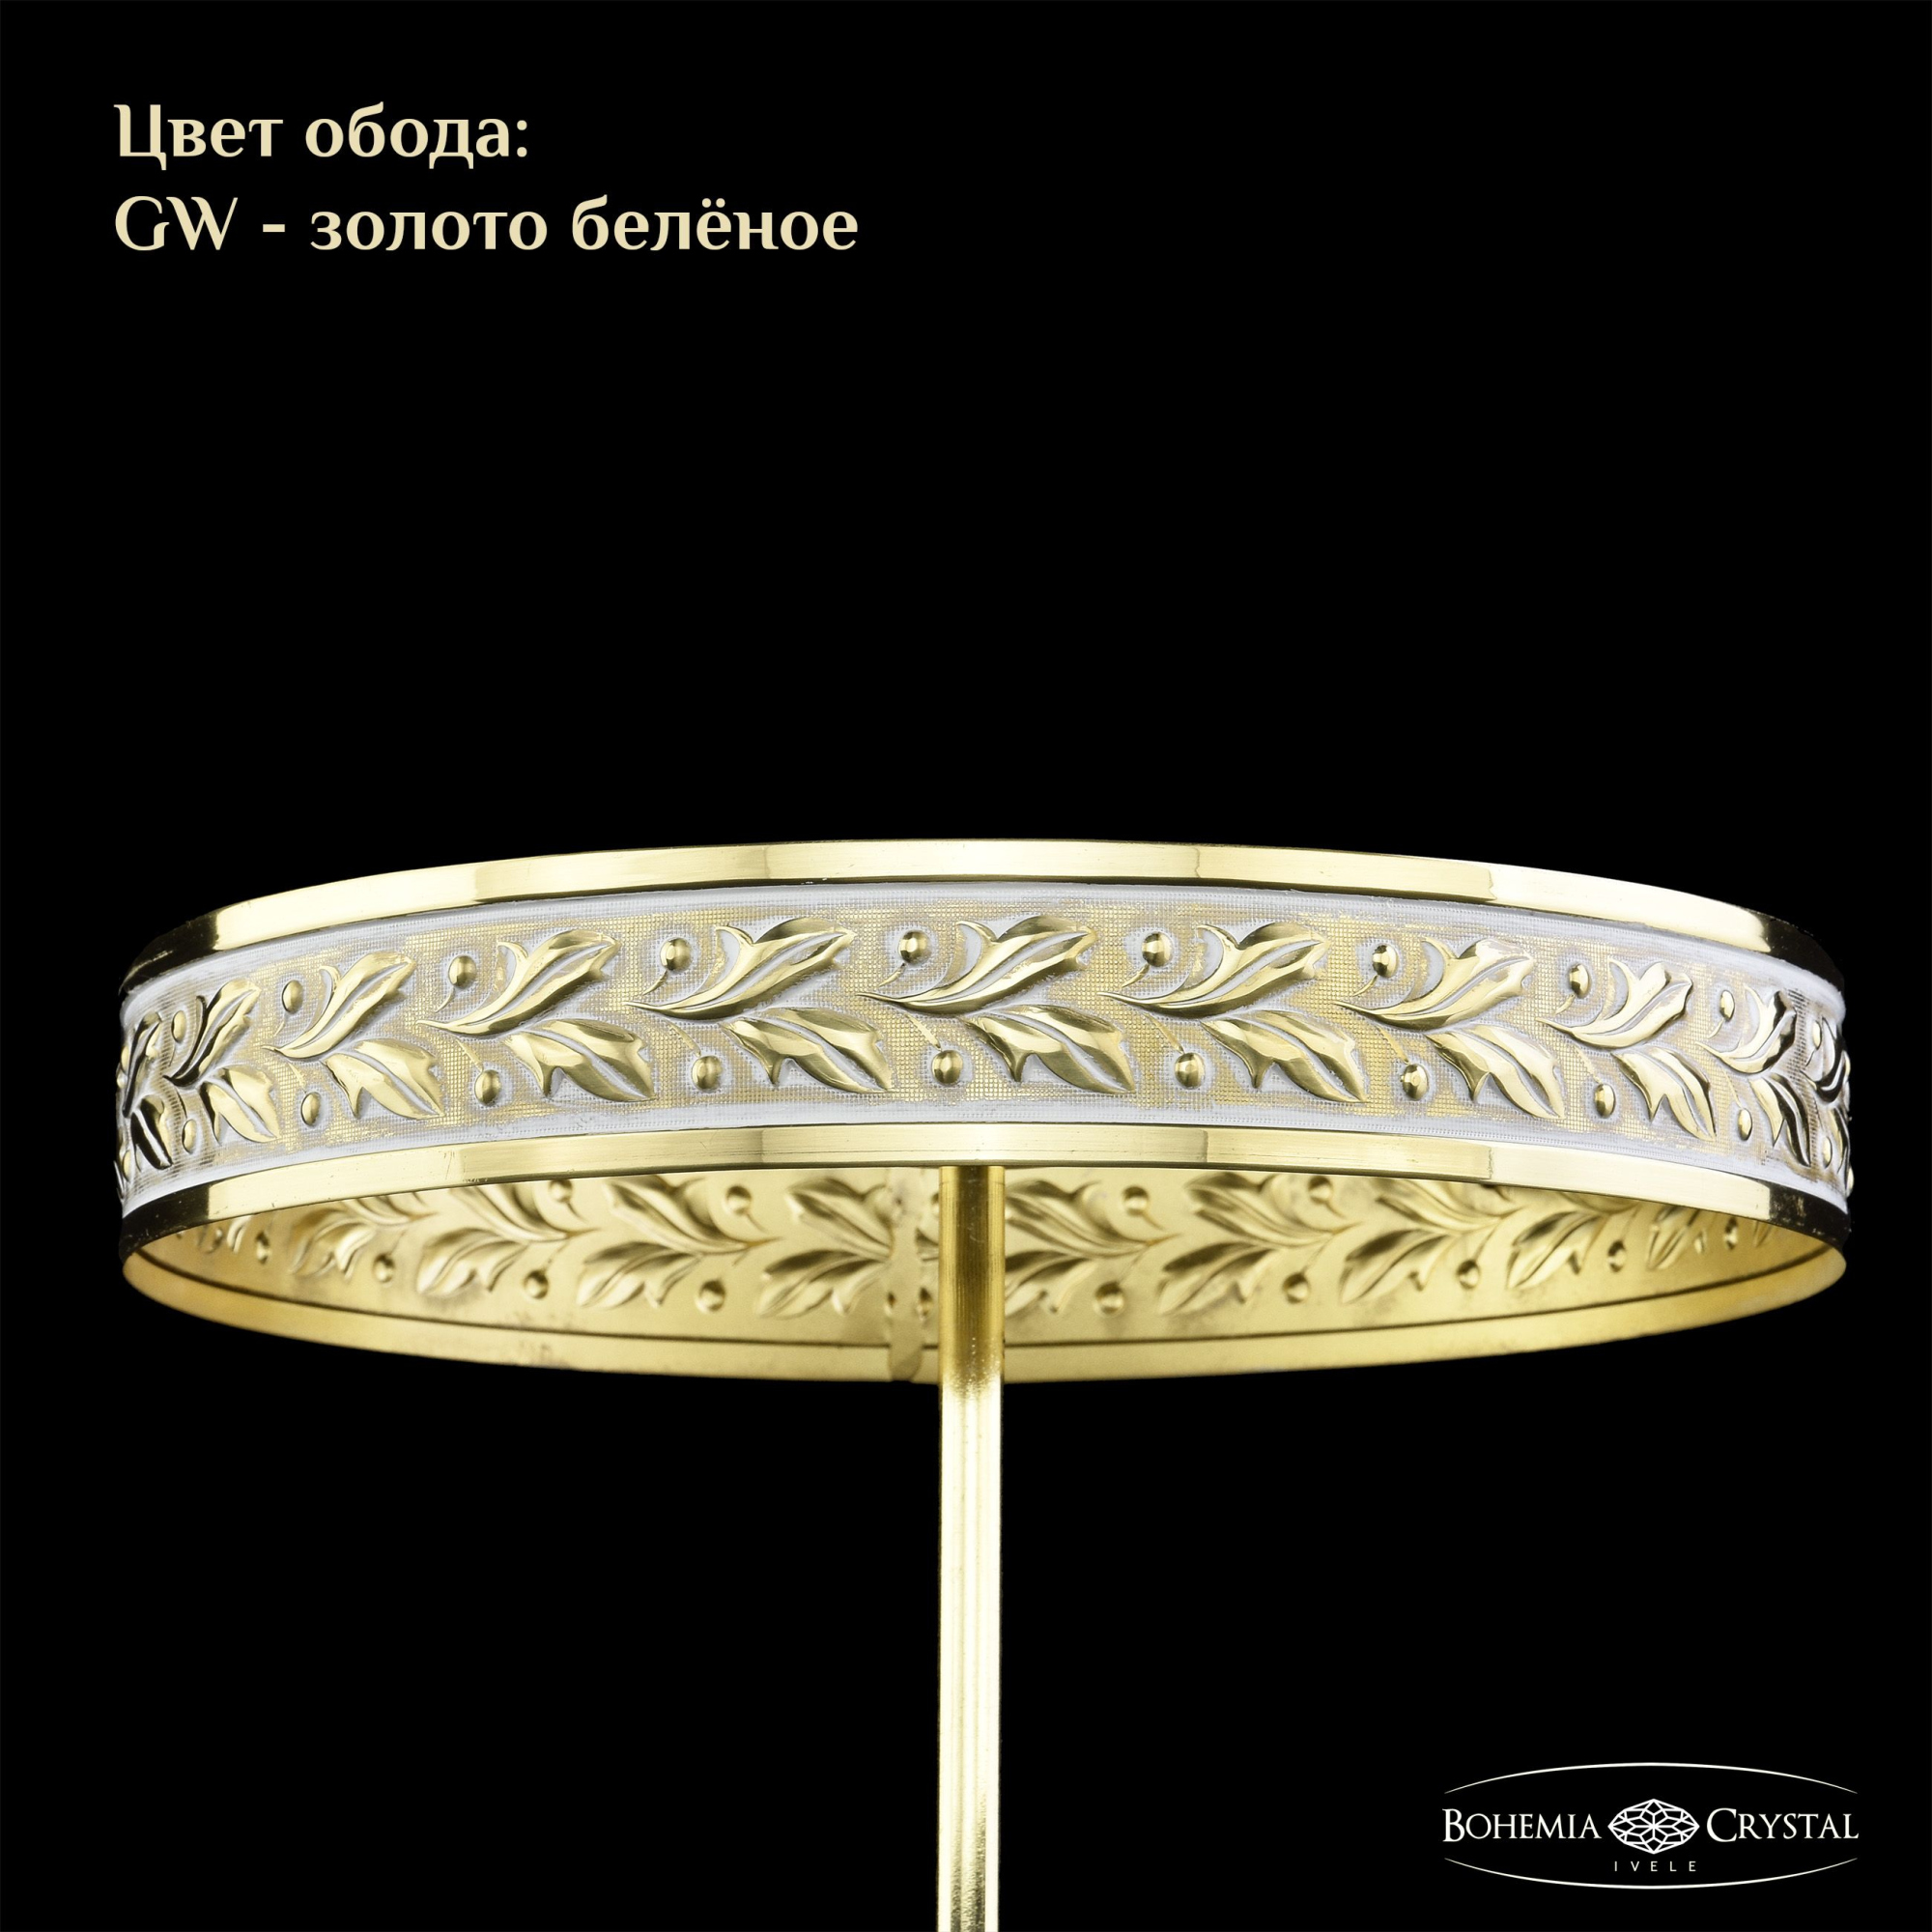 Настенный светильник Bohemia Crystal 19101B/35IV GW